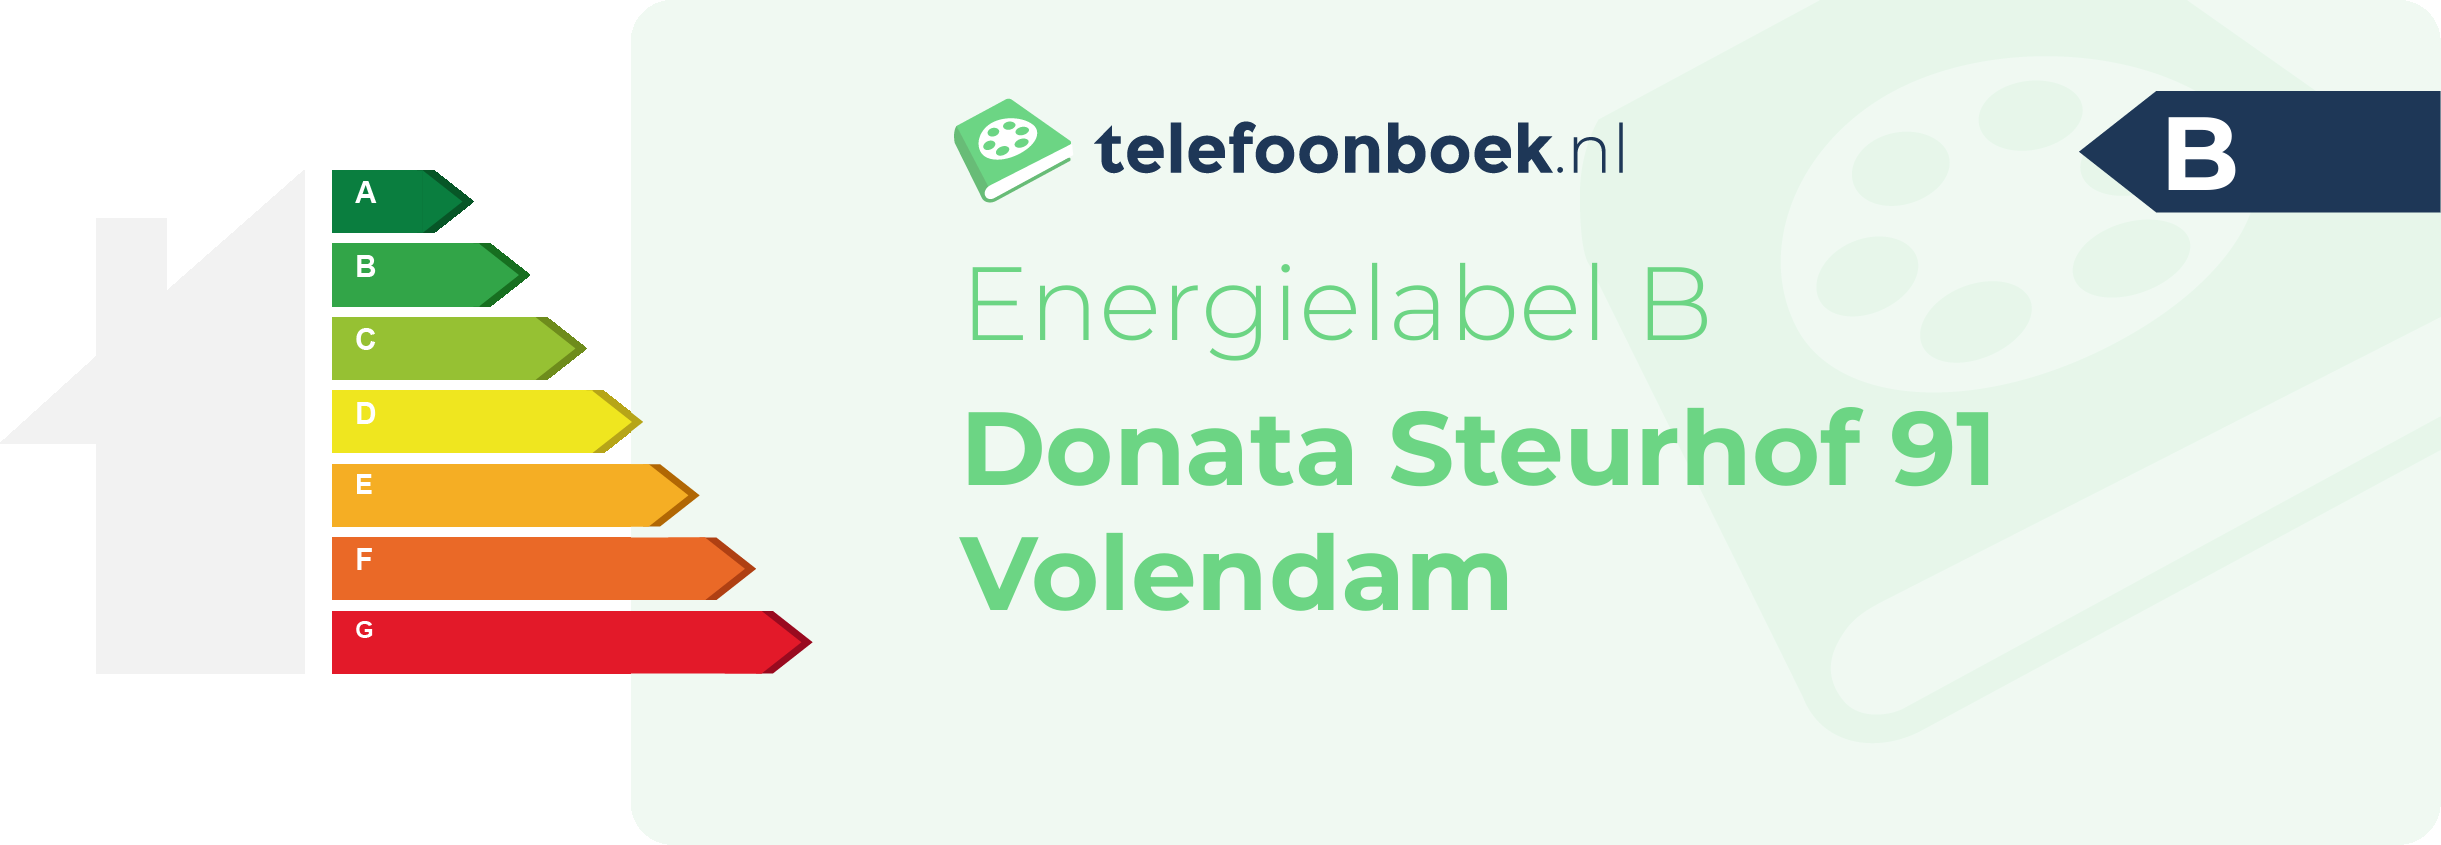 Energielabel Donata Steurhof 91 Volendam